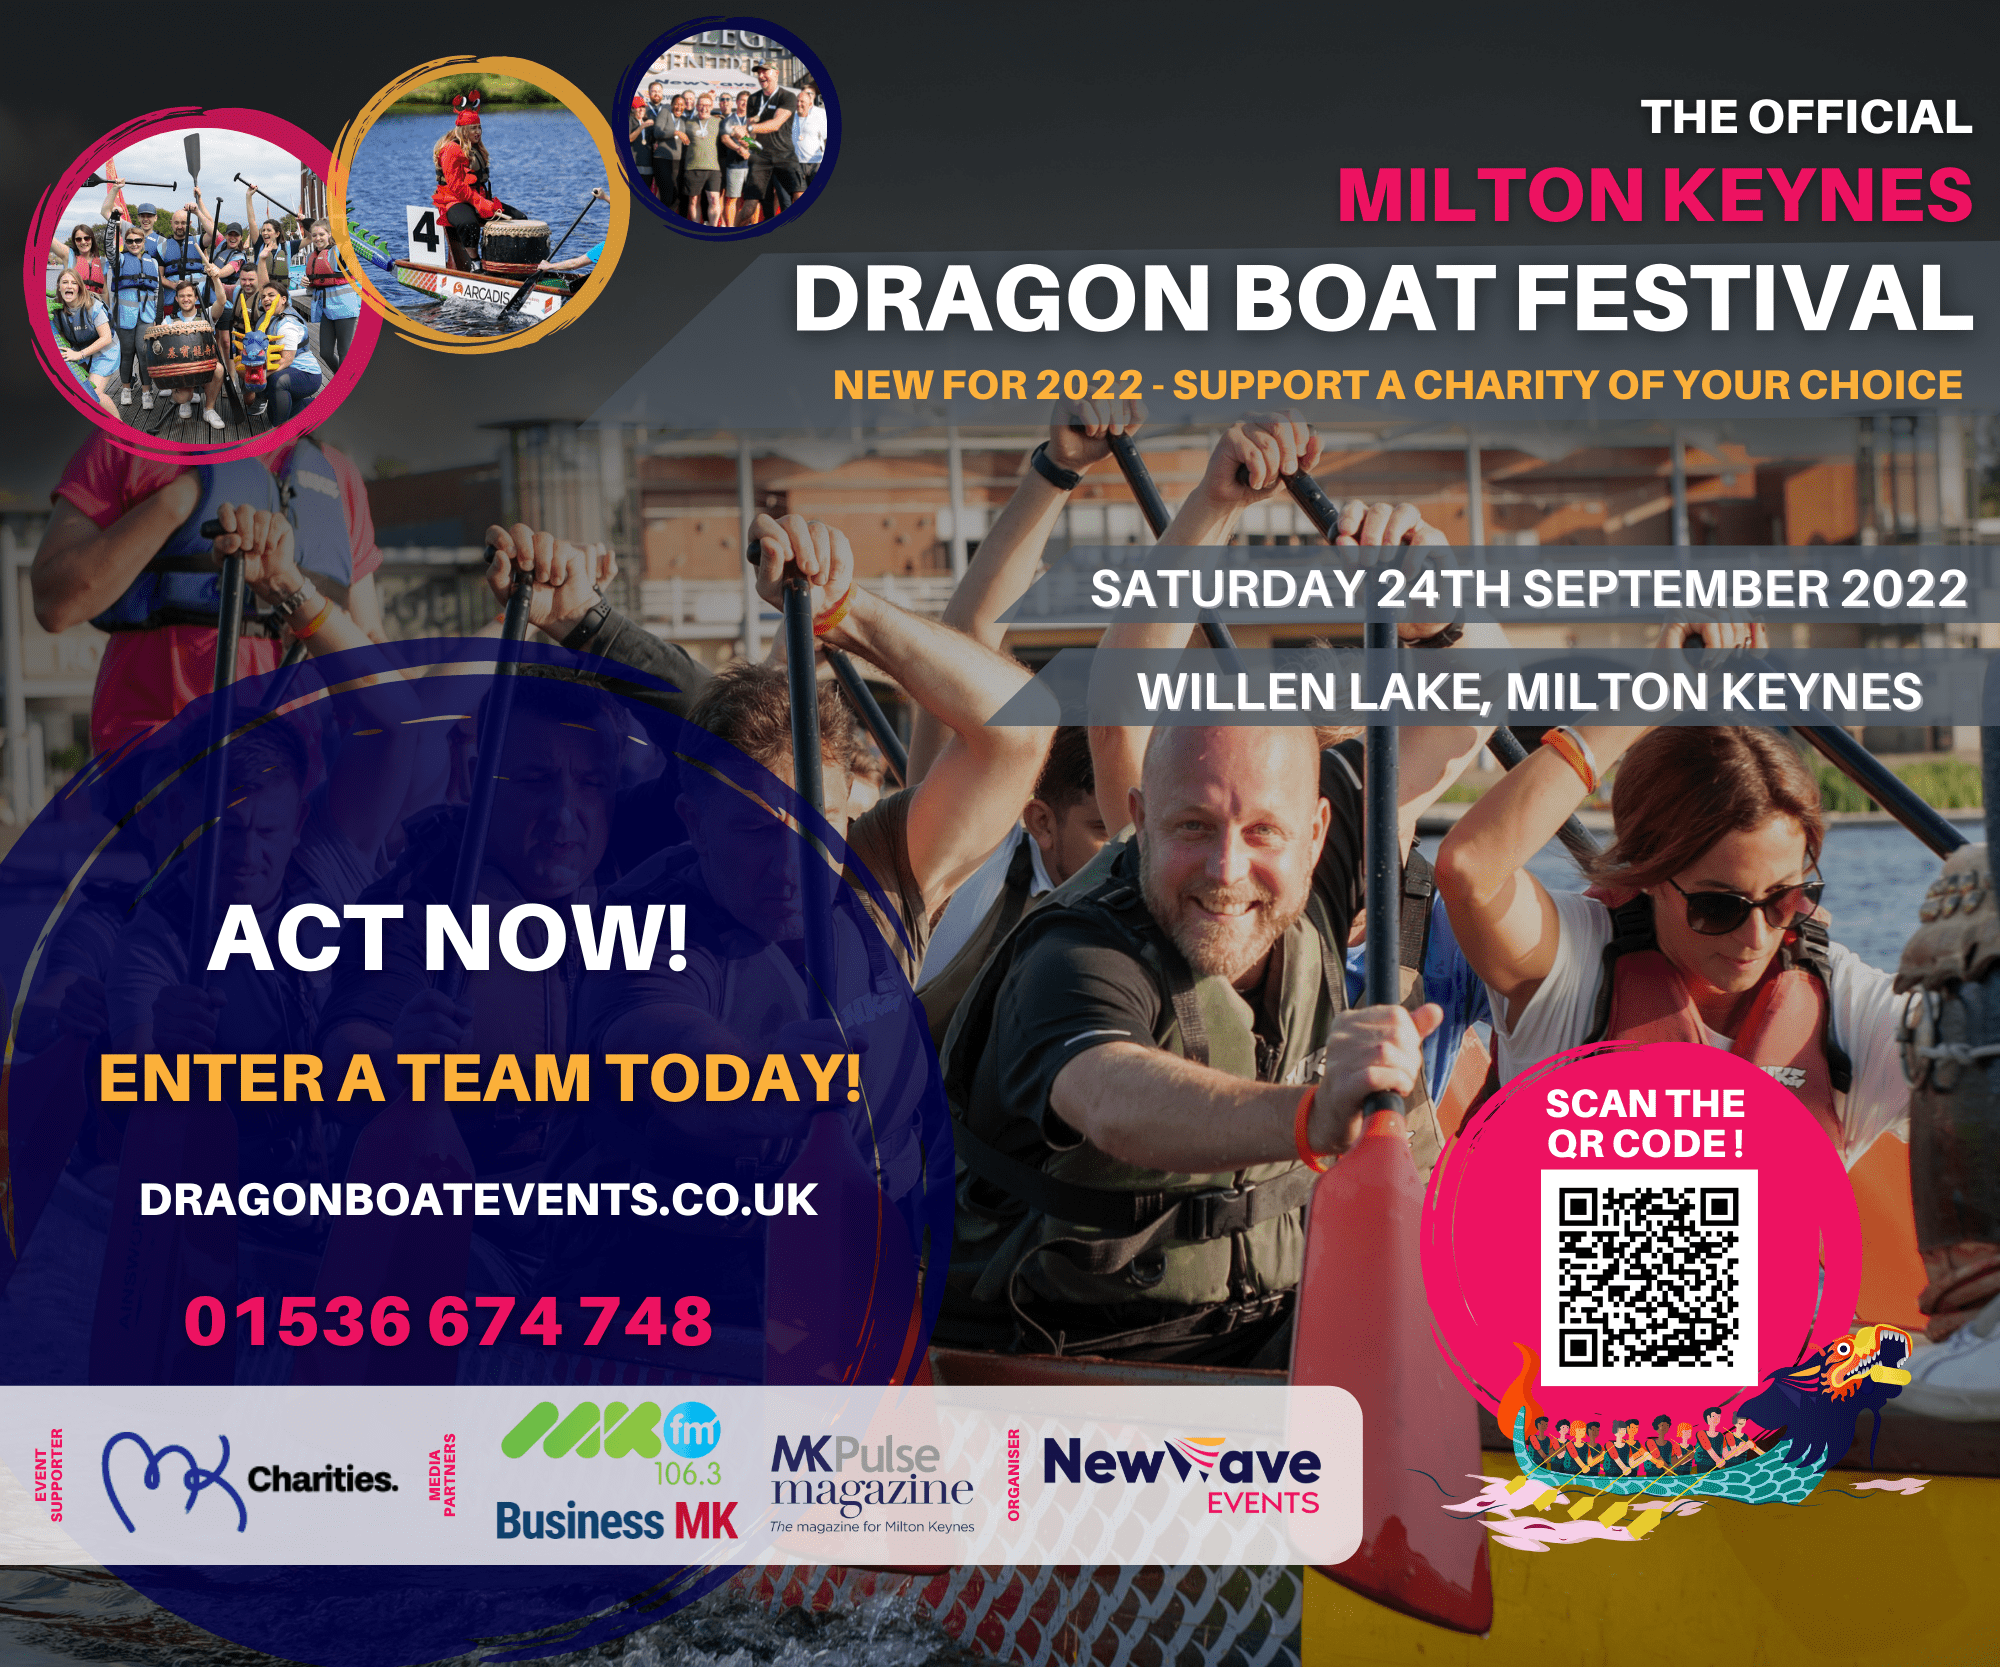 The Official Milton Keynes Dragon Boat Festival